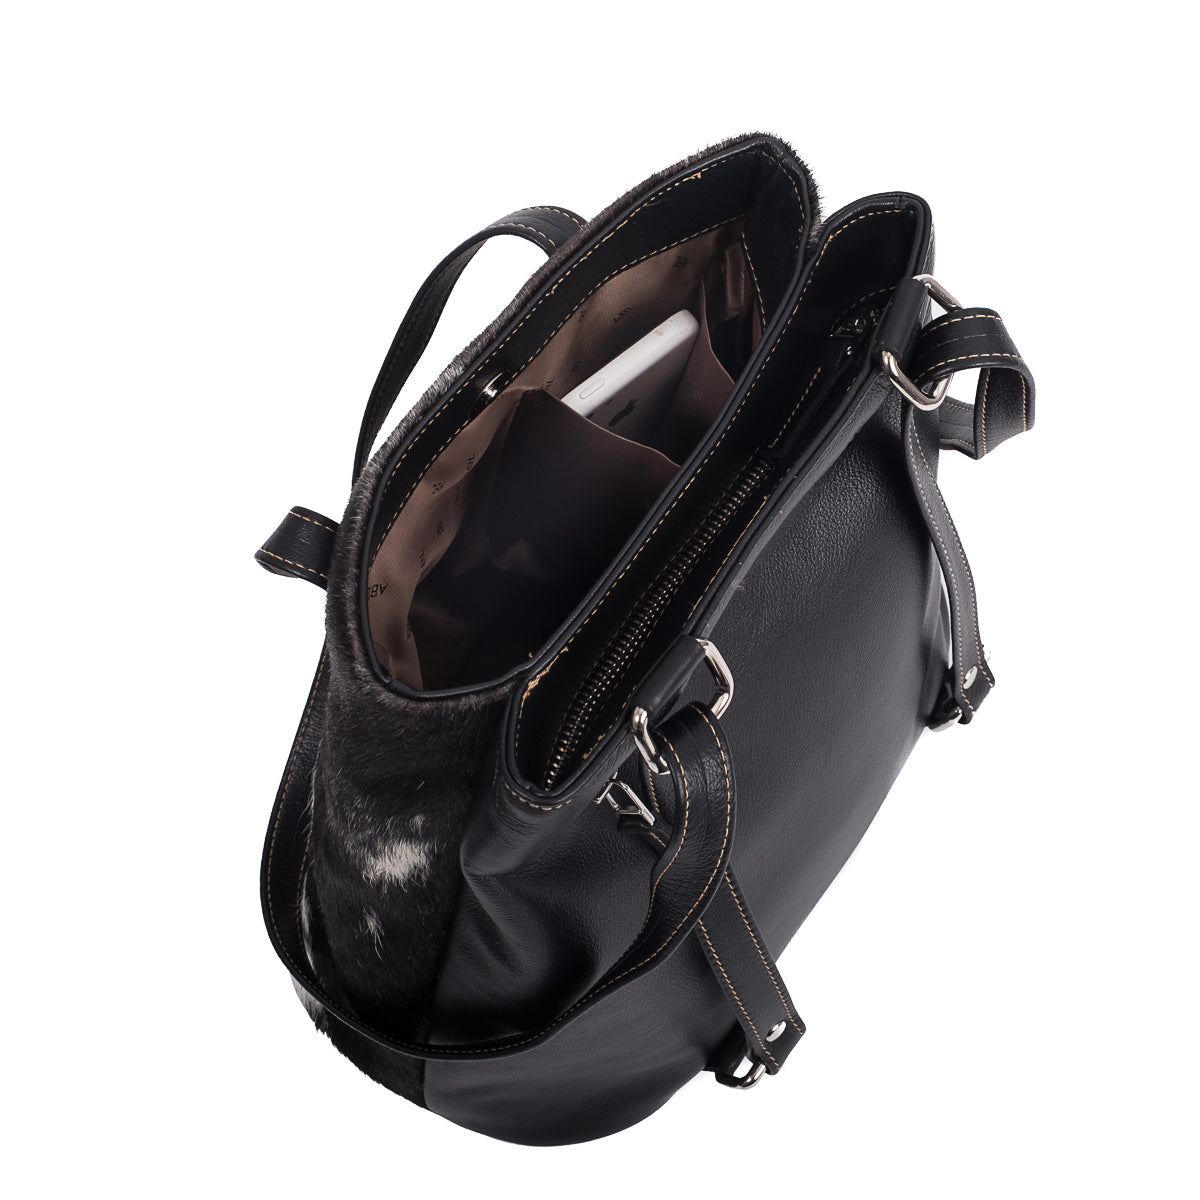 Backpack/Shoulder Bag - Rawhide - Aussie Bush Leather